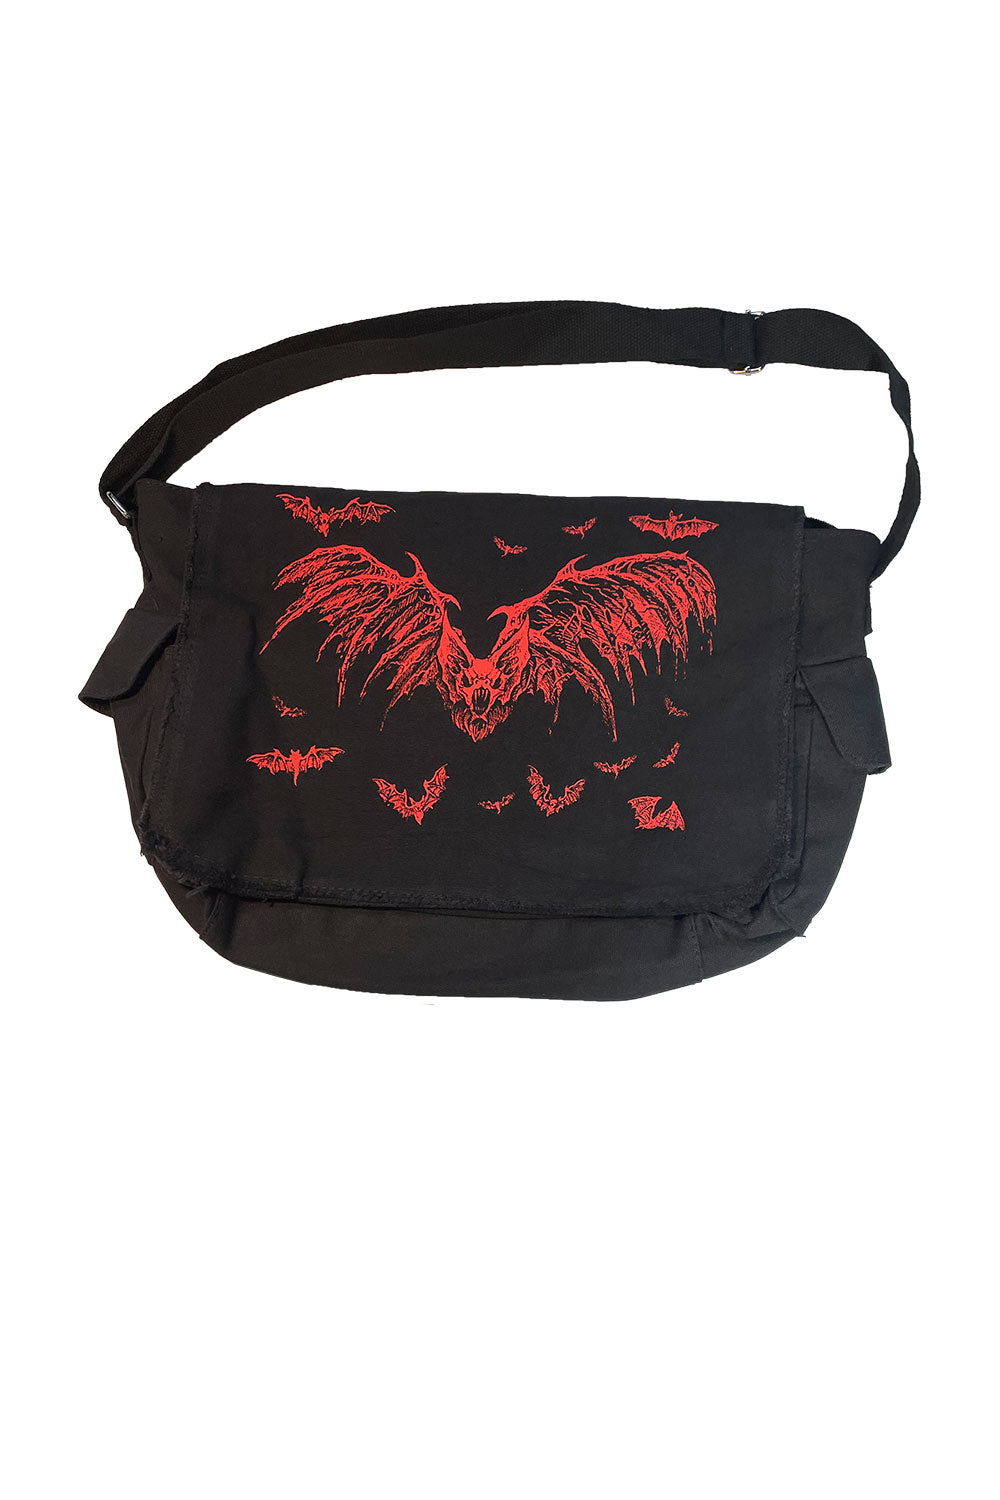 gothic vampire bat messenger bag